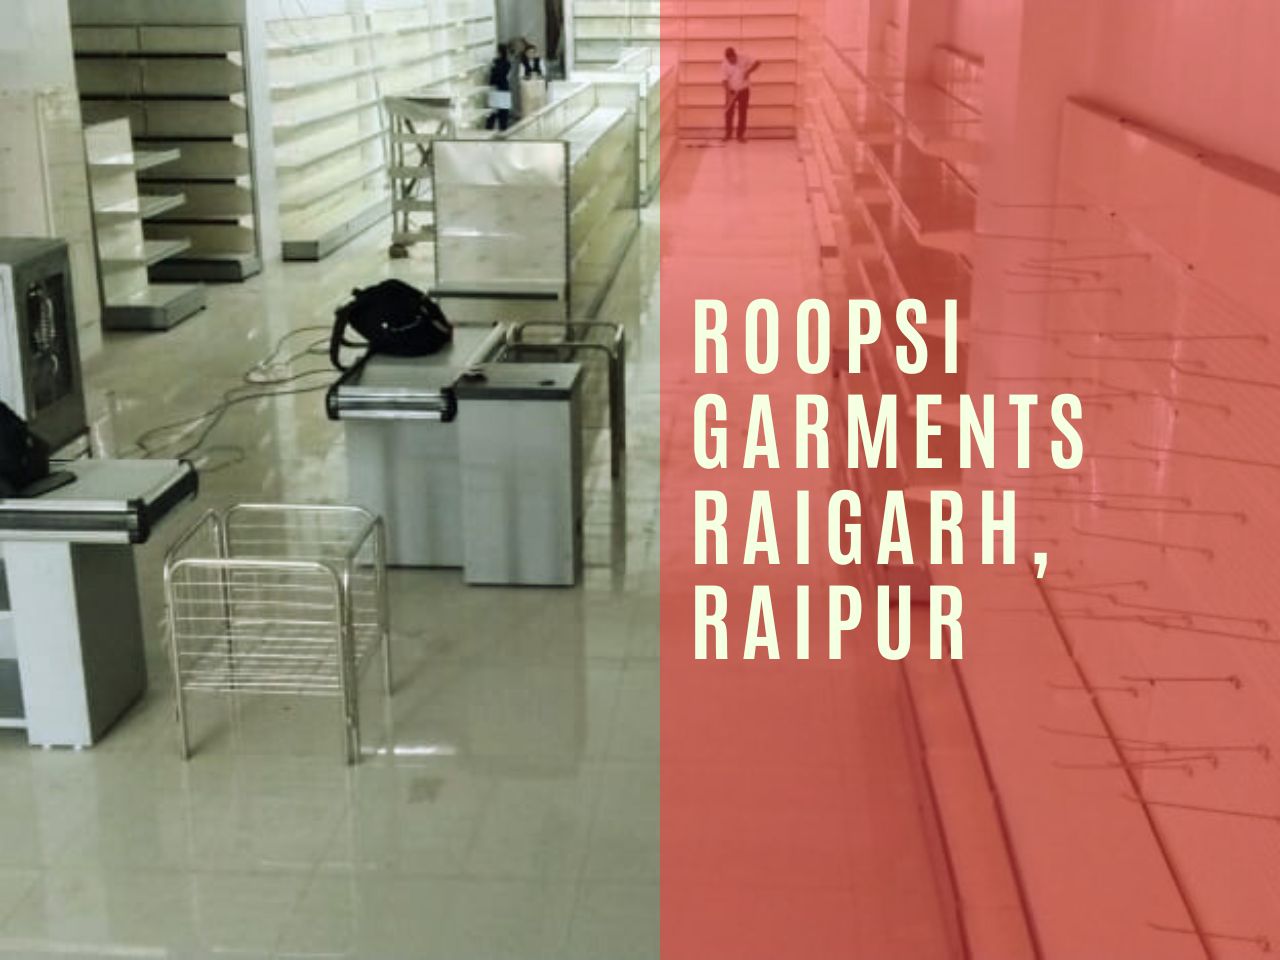 Roopsi Garments Raigarh, Raipur.jpg